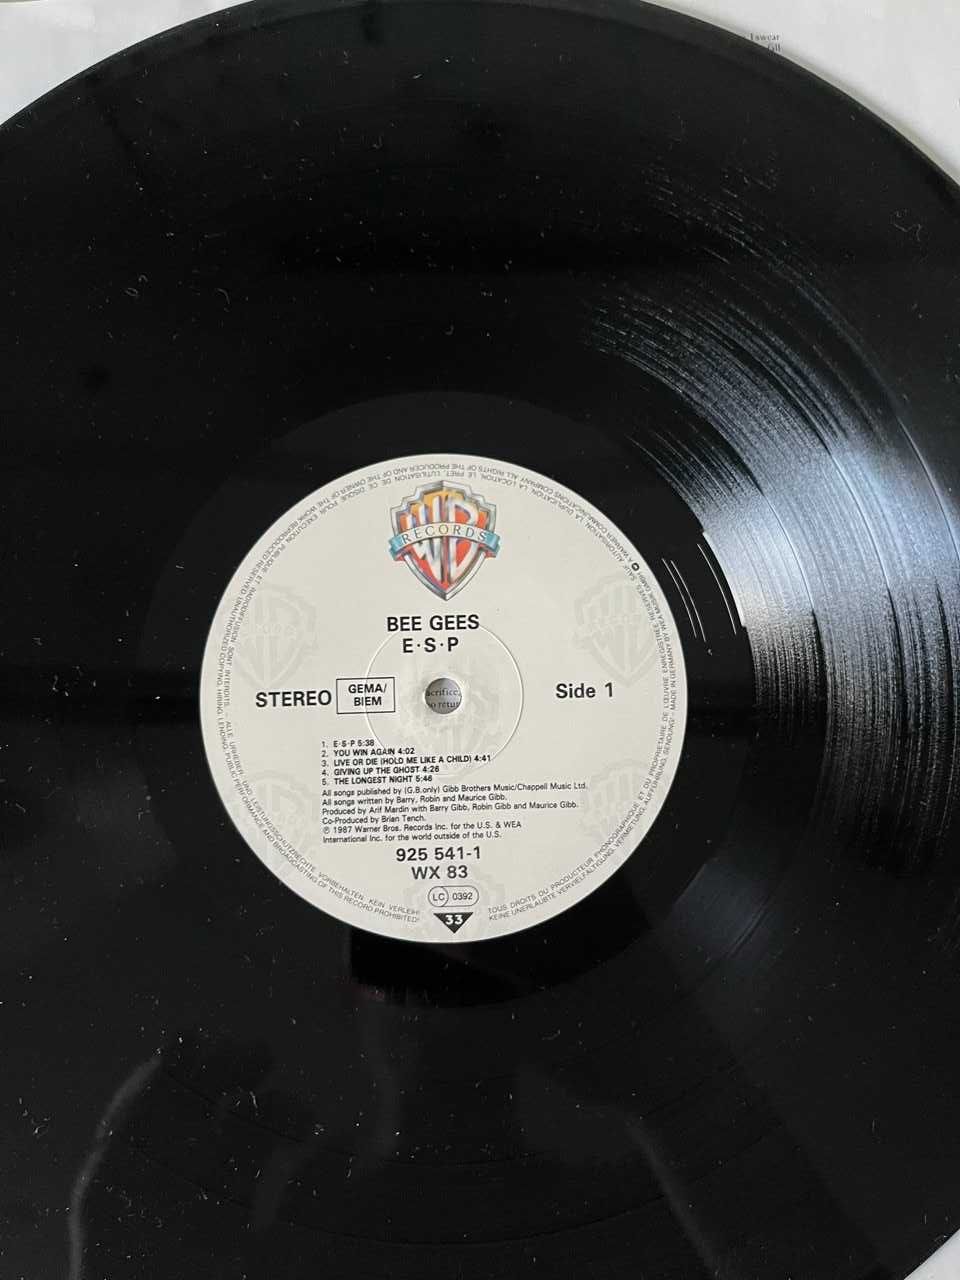 Bee Gees - ESP - płyta LP